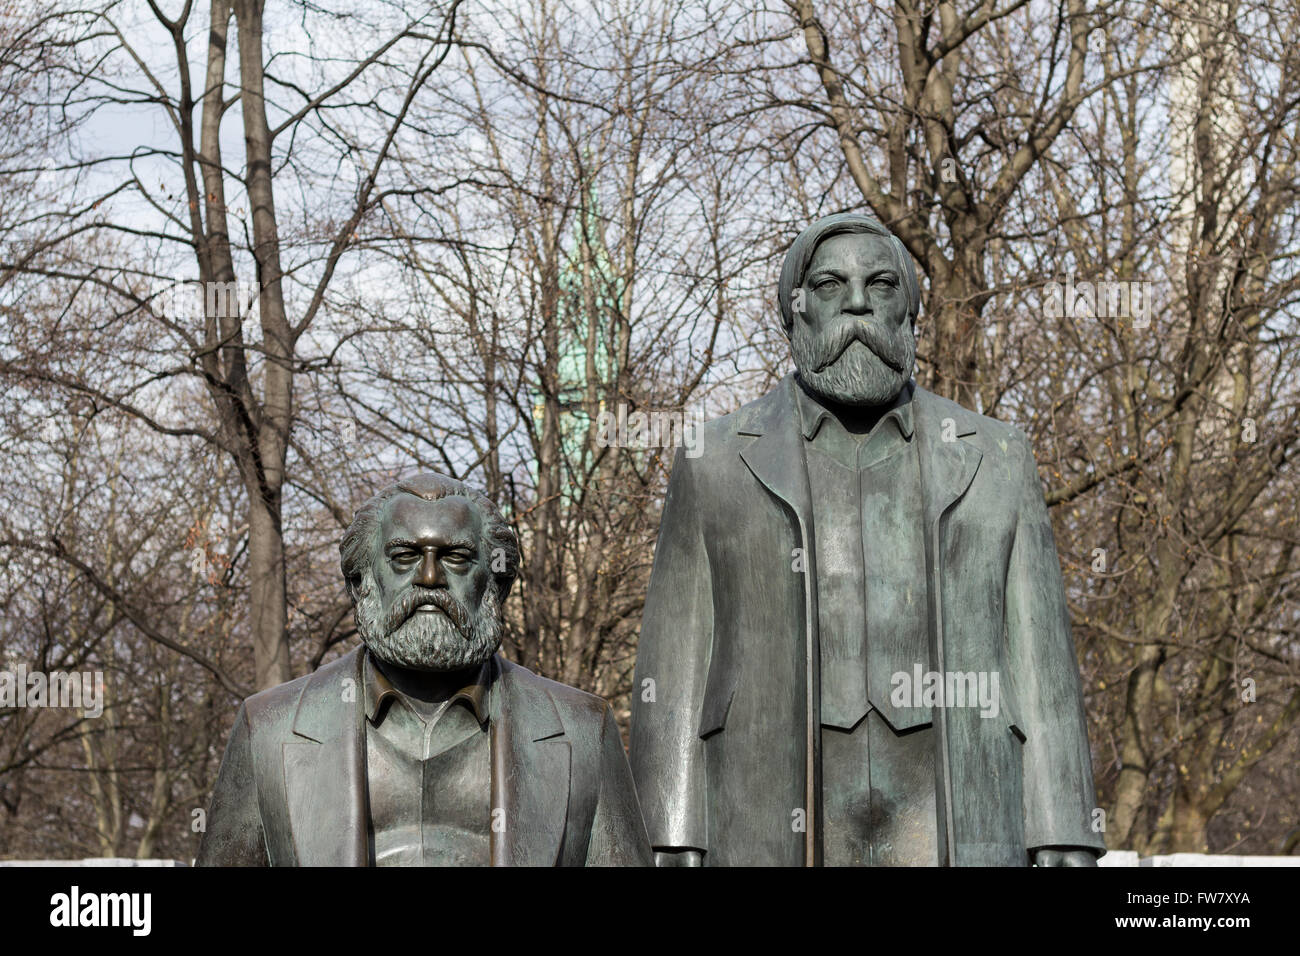 Berlino, Germania - 30 marzo 2016: Statua di Karl Marx e Friedrich Engels nei pressi di Alexanderplatz di Berlino, Germania. Foto Stock